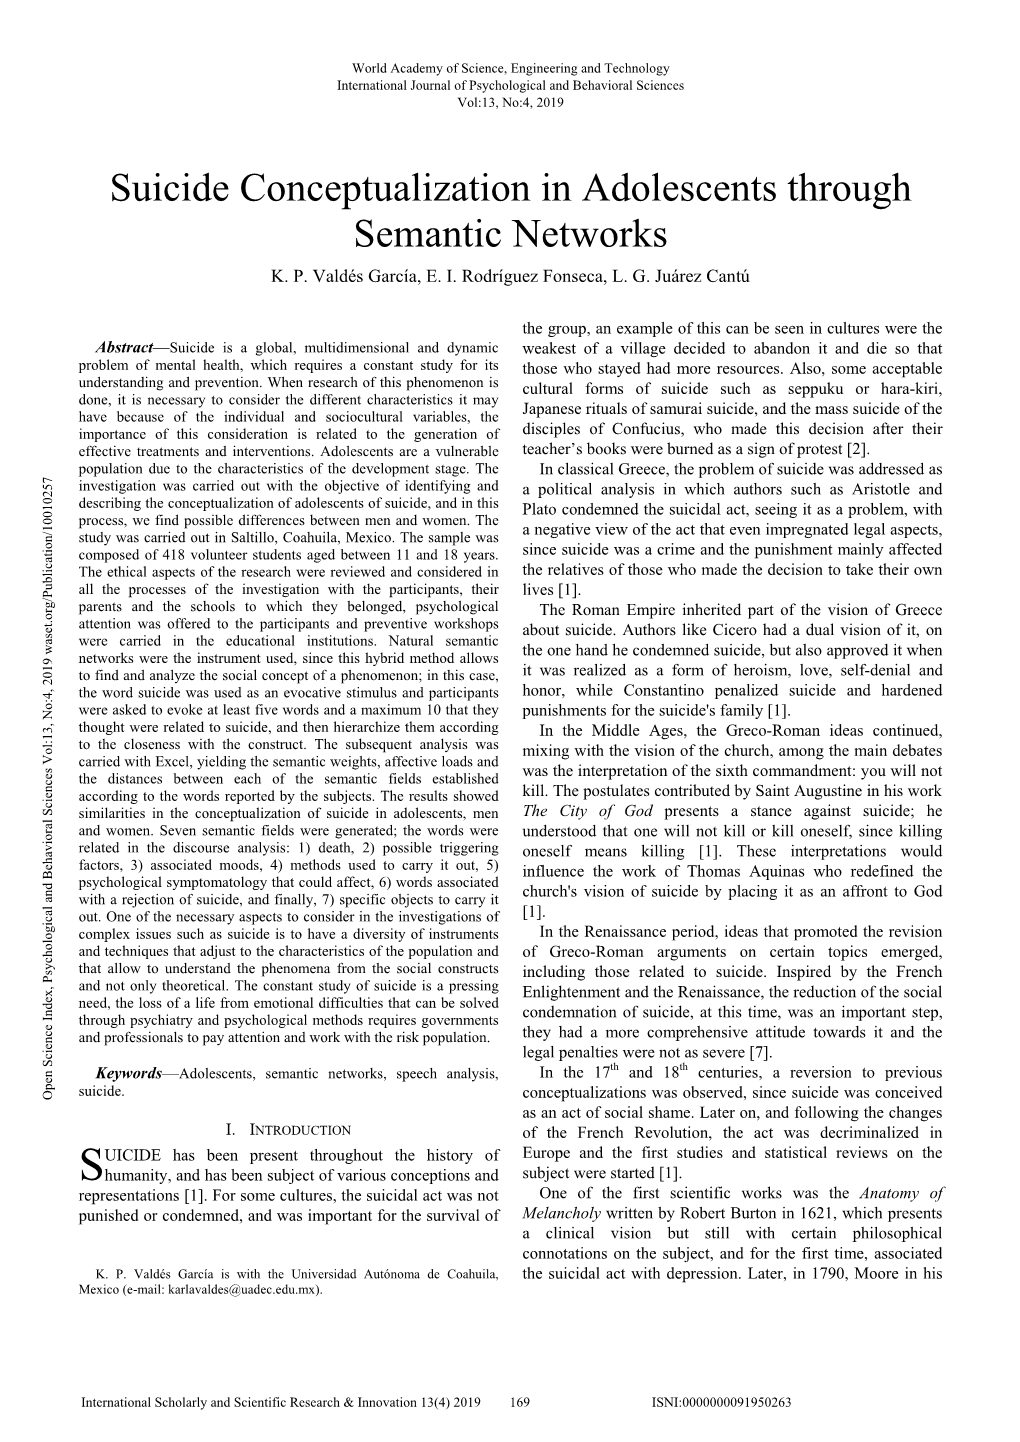 Suicide Conceptualization in Adolescents Through Semantic Networks K